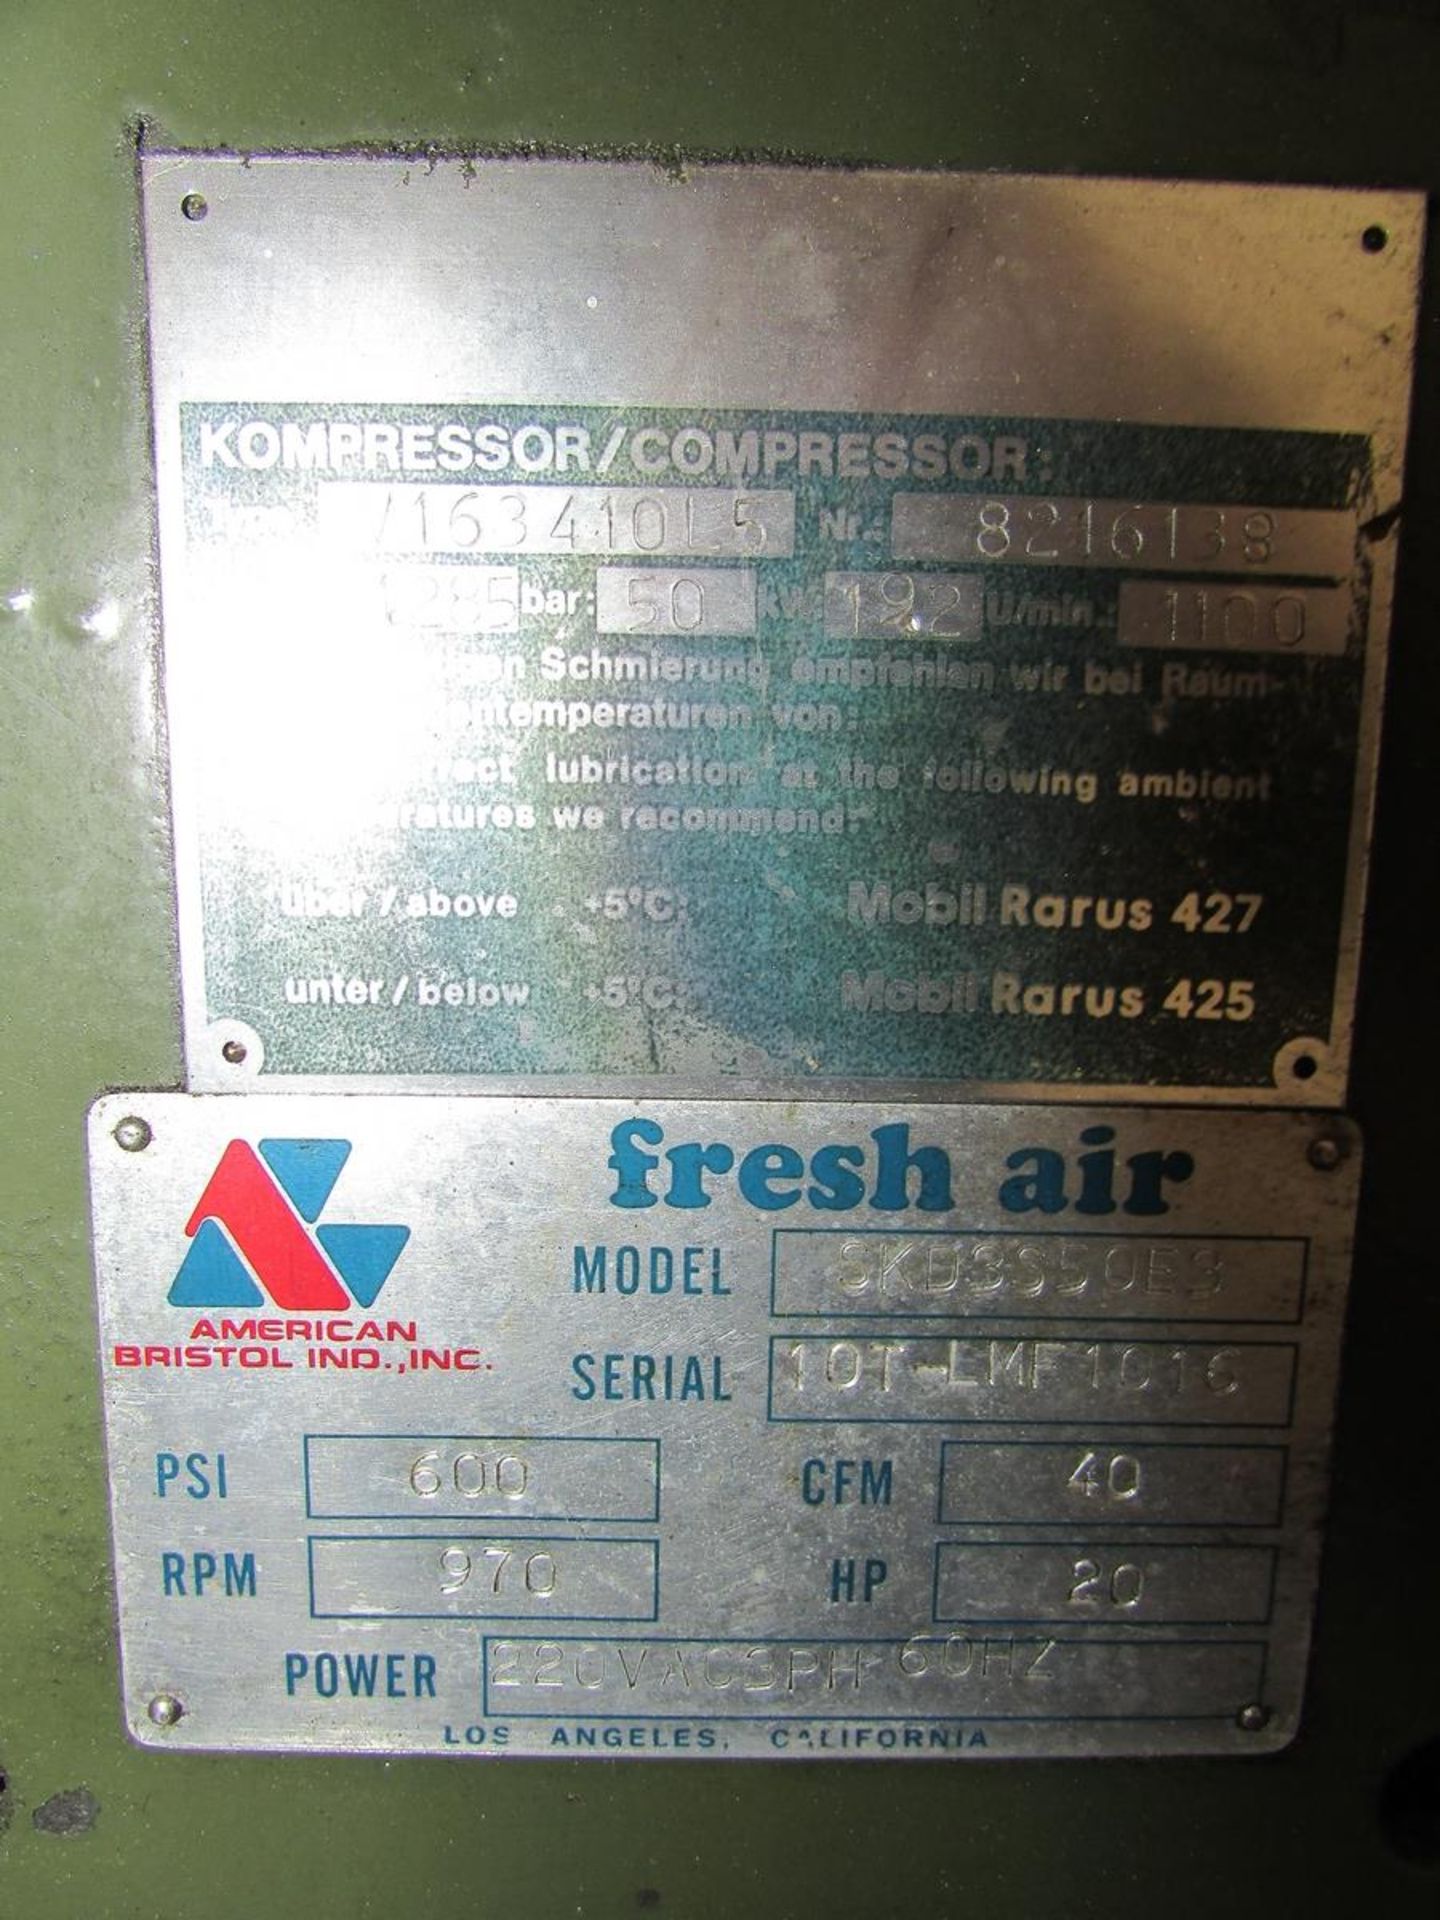 American Bristol IND Inc SKD3S50E3 20HP Multi-Stage Portable Air Compressor - Image 22 of 22